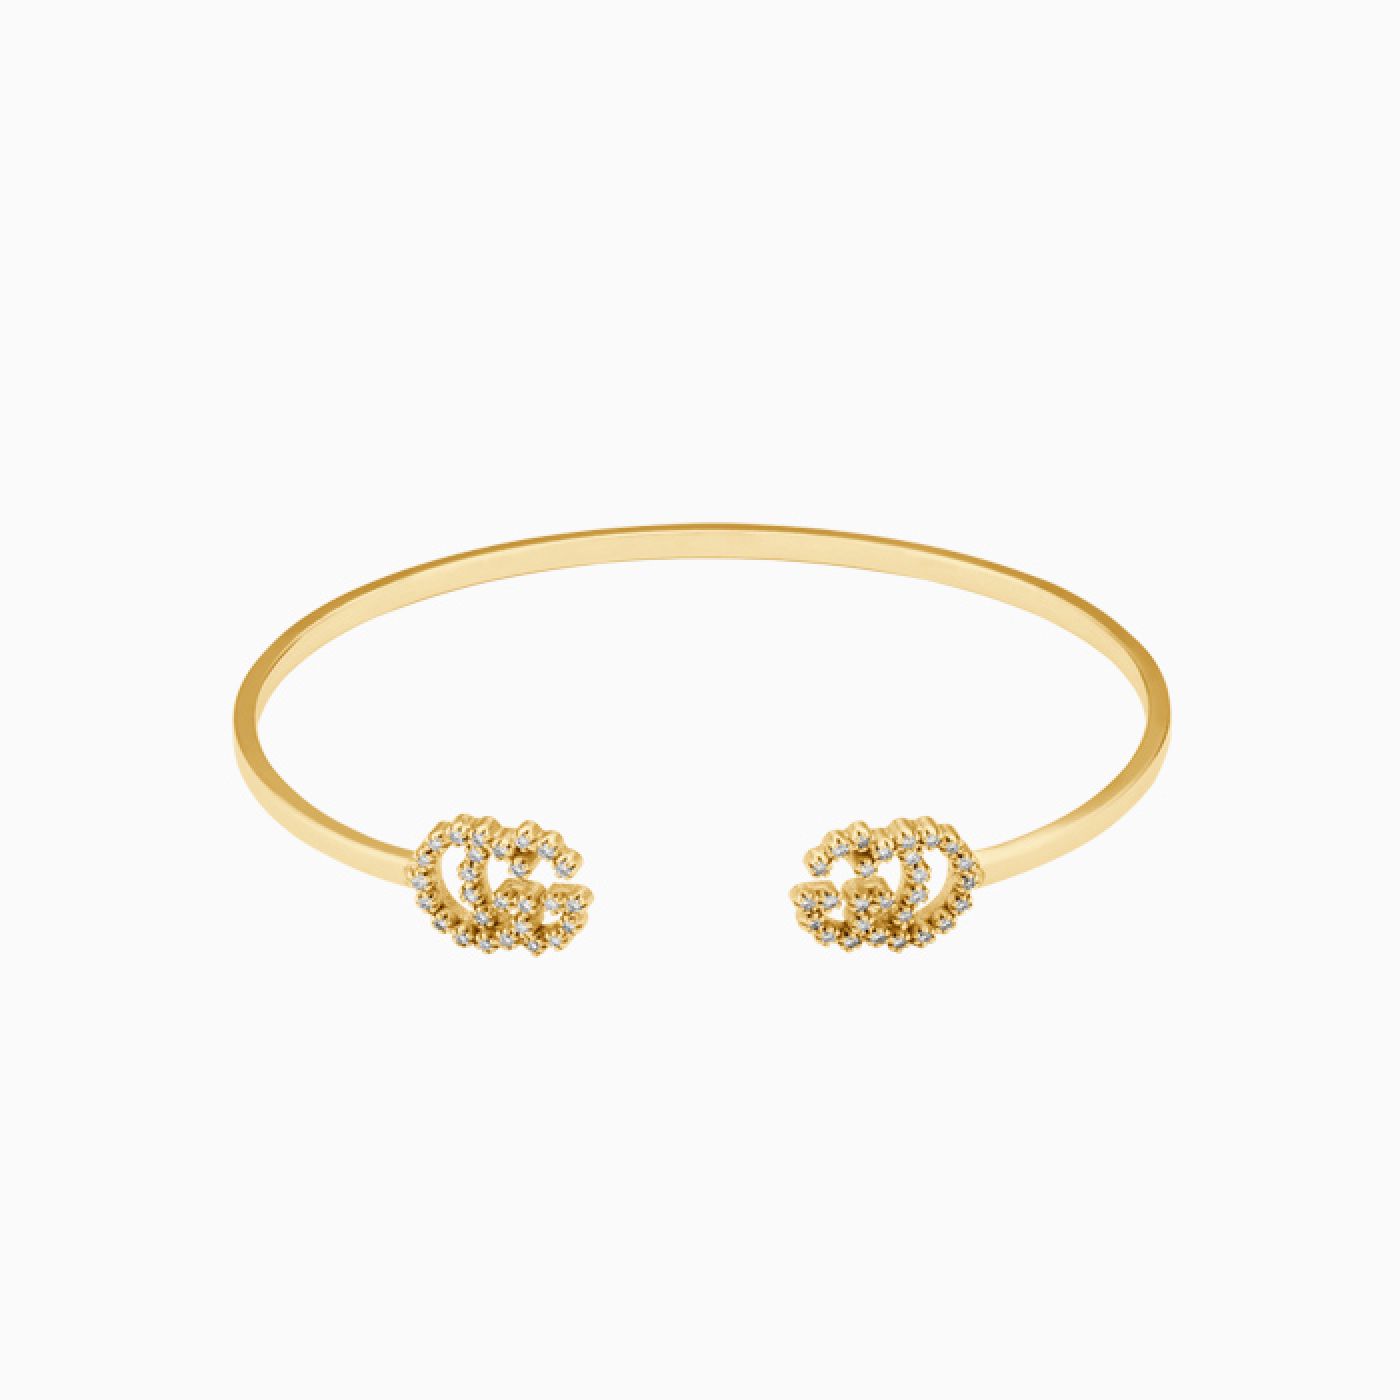 Gucci GG Running bracelet in yellow gold with diamonds | RABAT Jewels |  Ref. P029100669